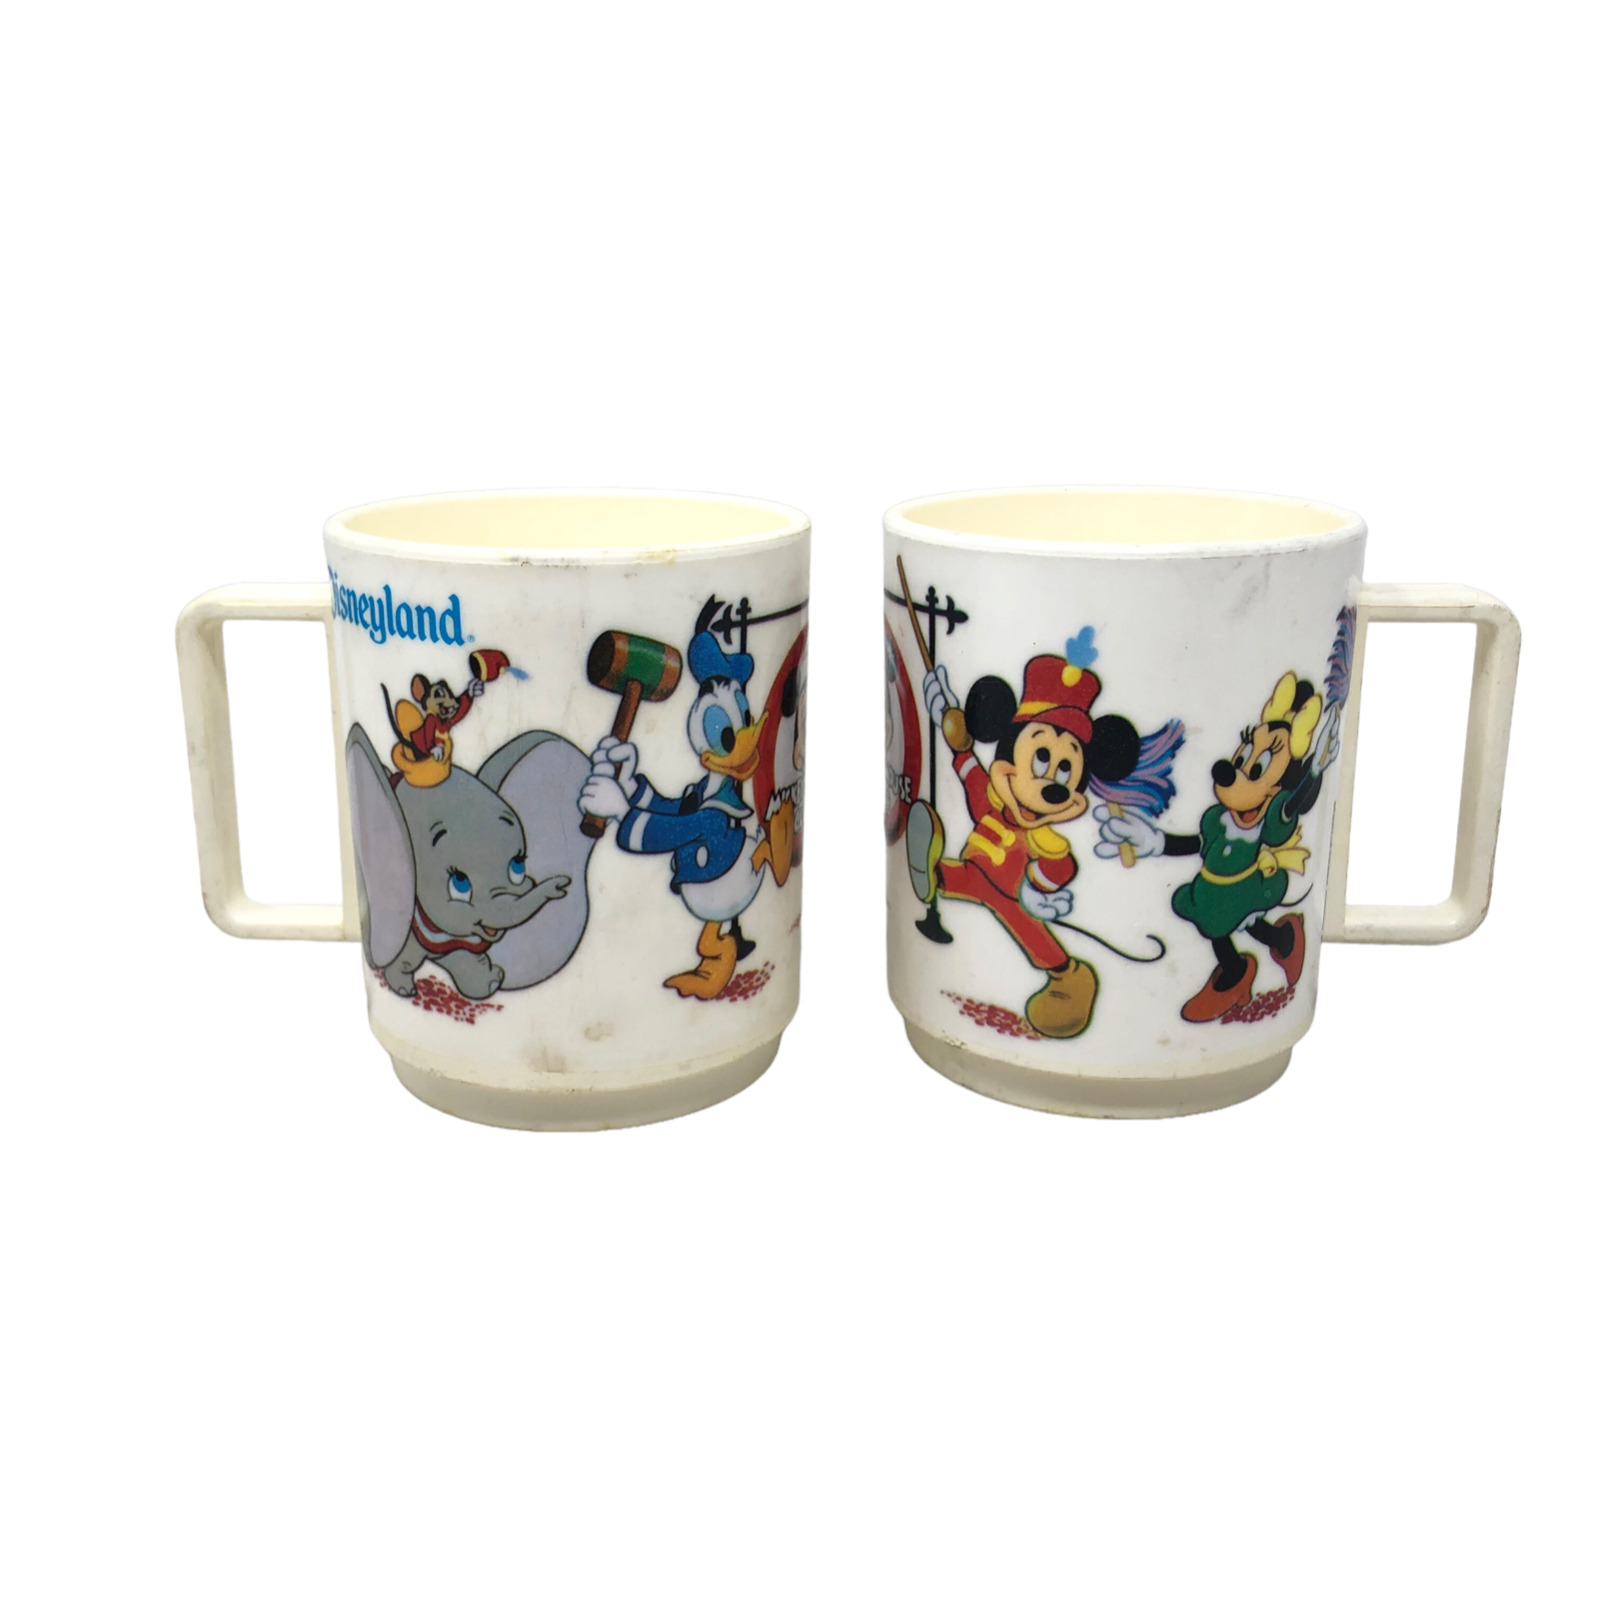 Lot of 2 VTG Disneyland  Deka Plastic Cups Mickey Mouse Club Dumbo Donald Minnie